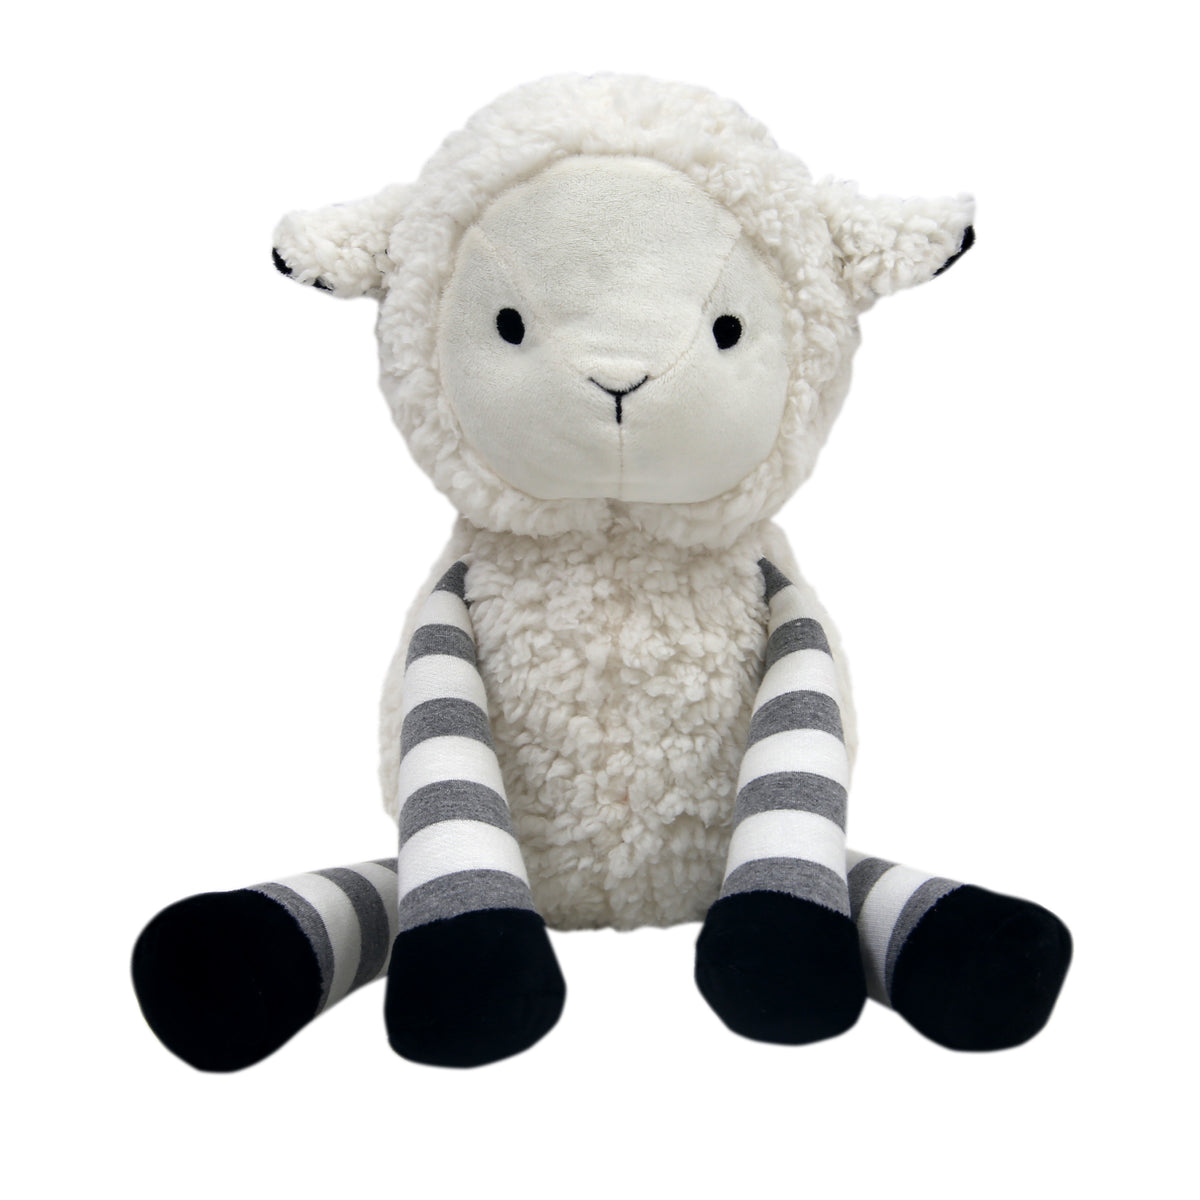 Little Miracles Lamb Plush 10 White Sheep Stuffed Animal Baby Toy